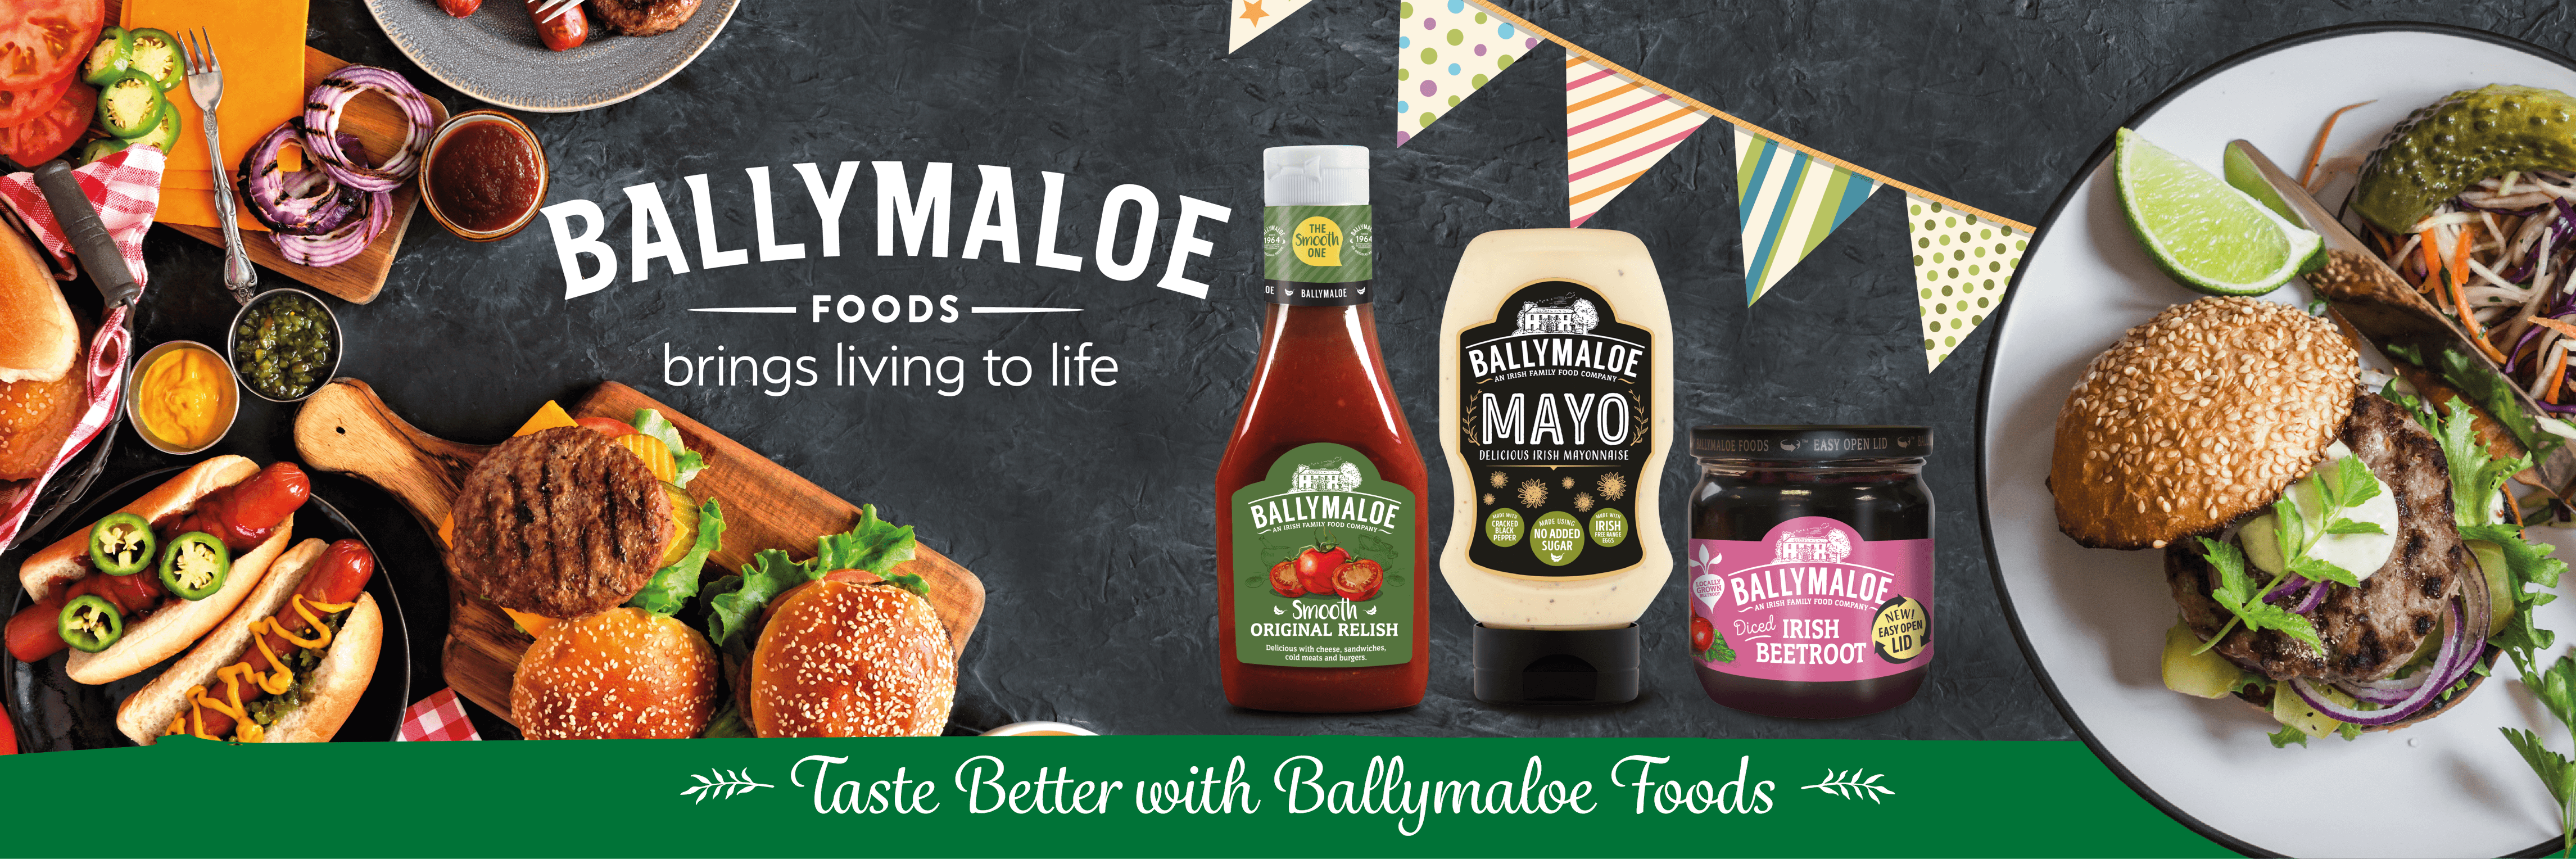 Summer - Ballymaloe Foods